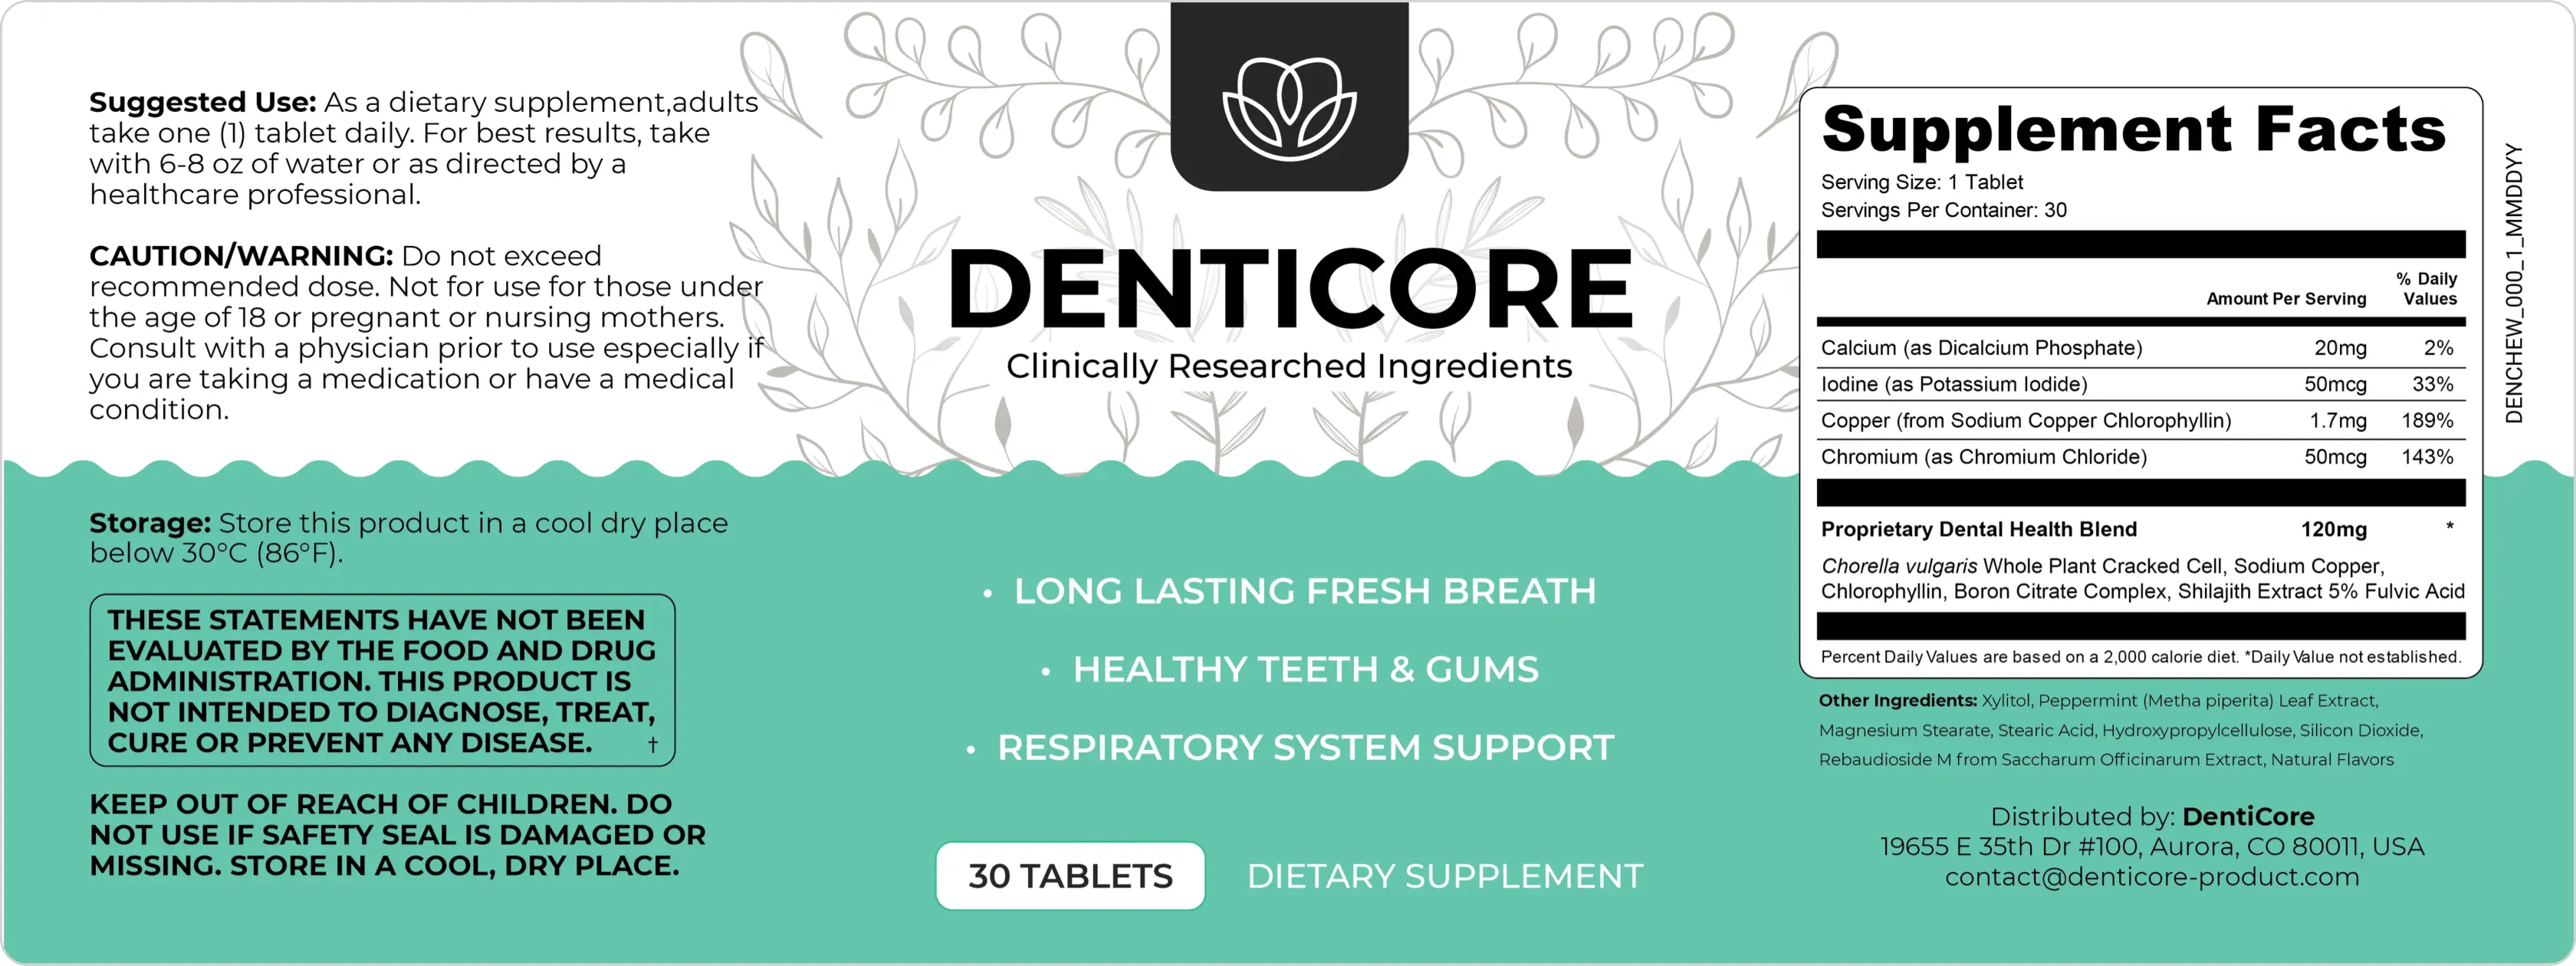 denticore-original-ingredients-lists